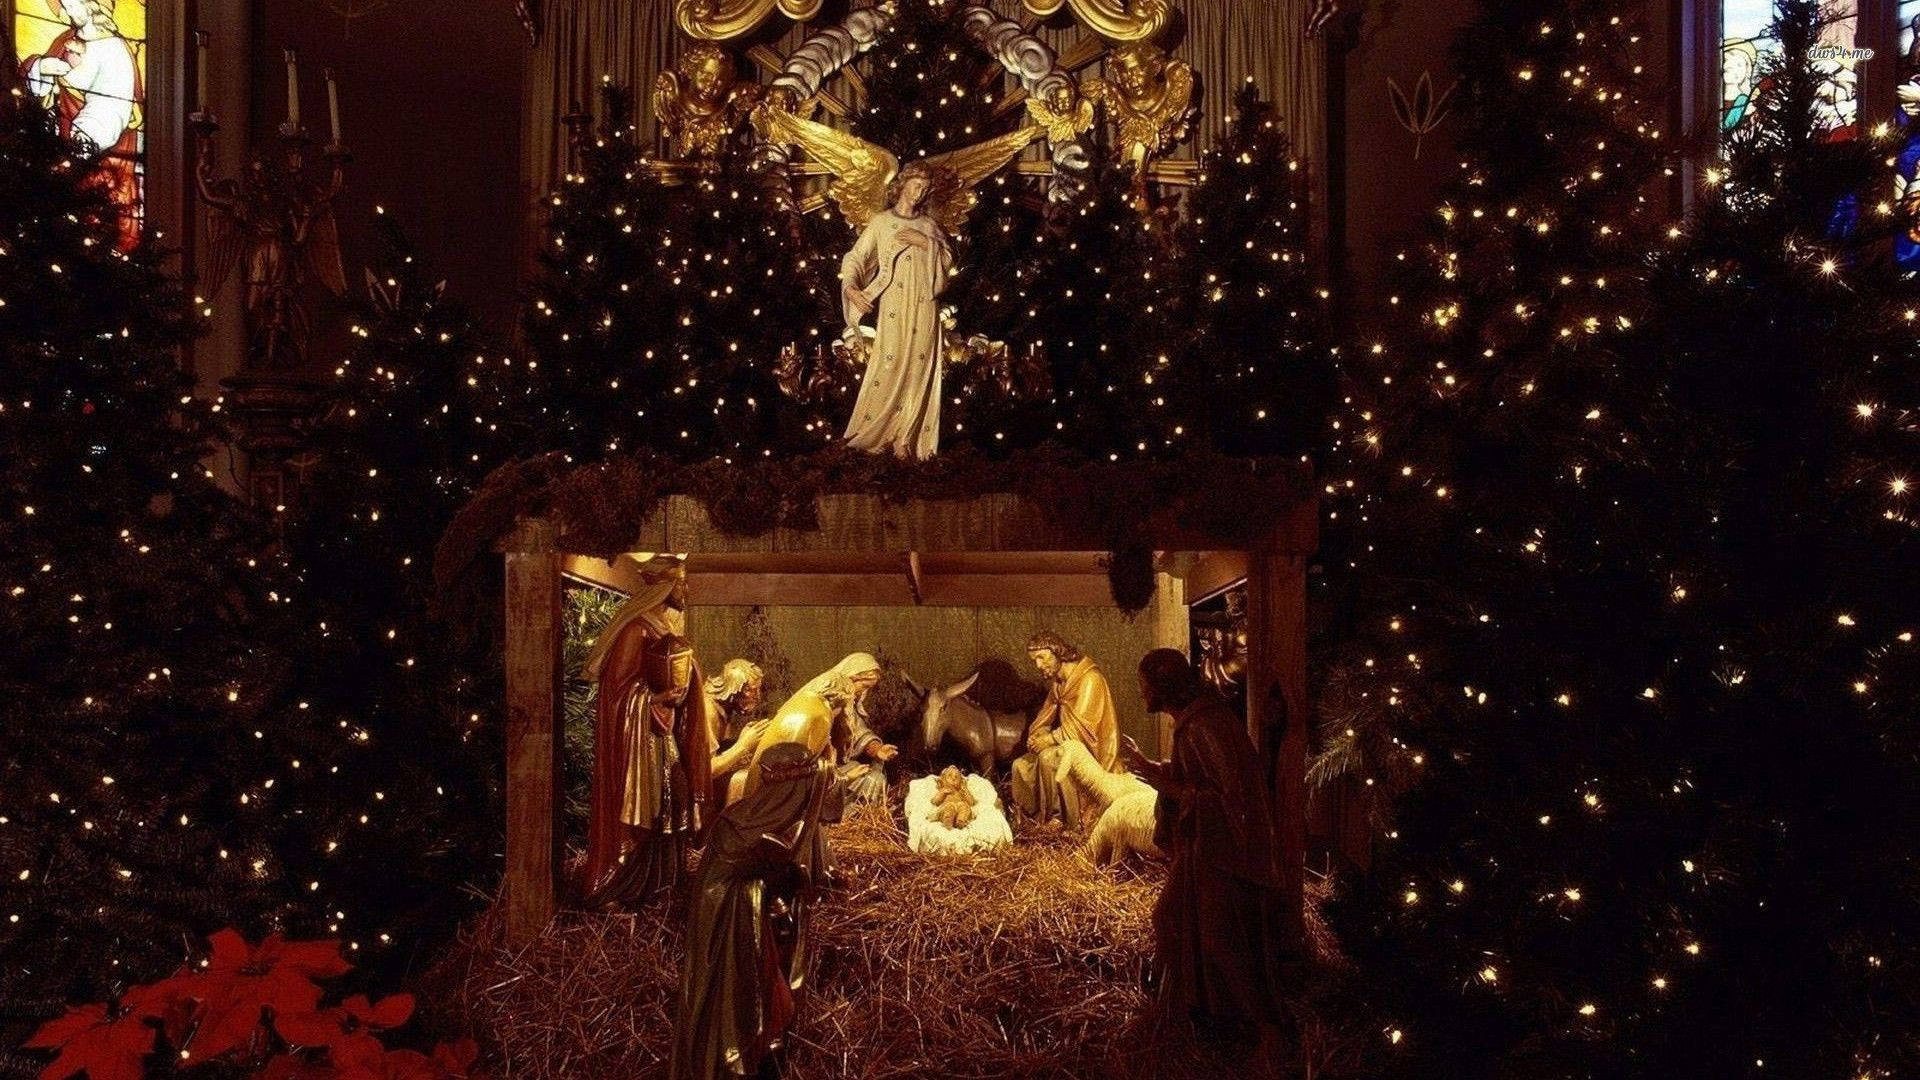 Nativity Scene Display Between Christmas Trees Background